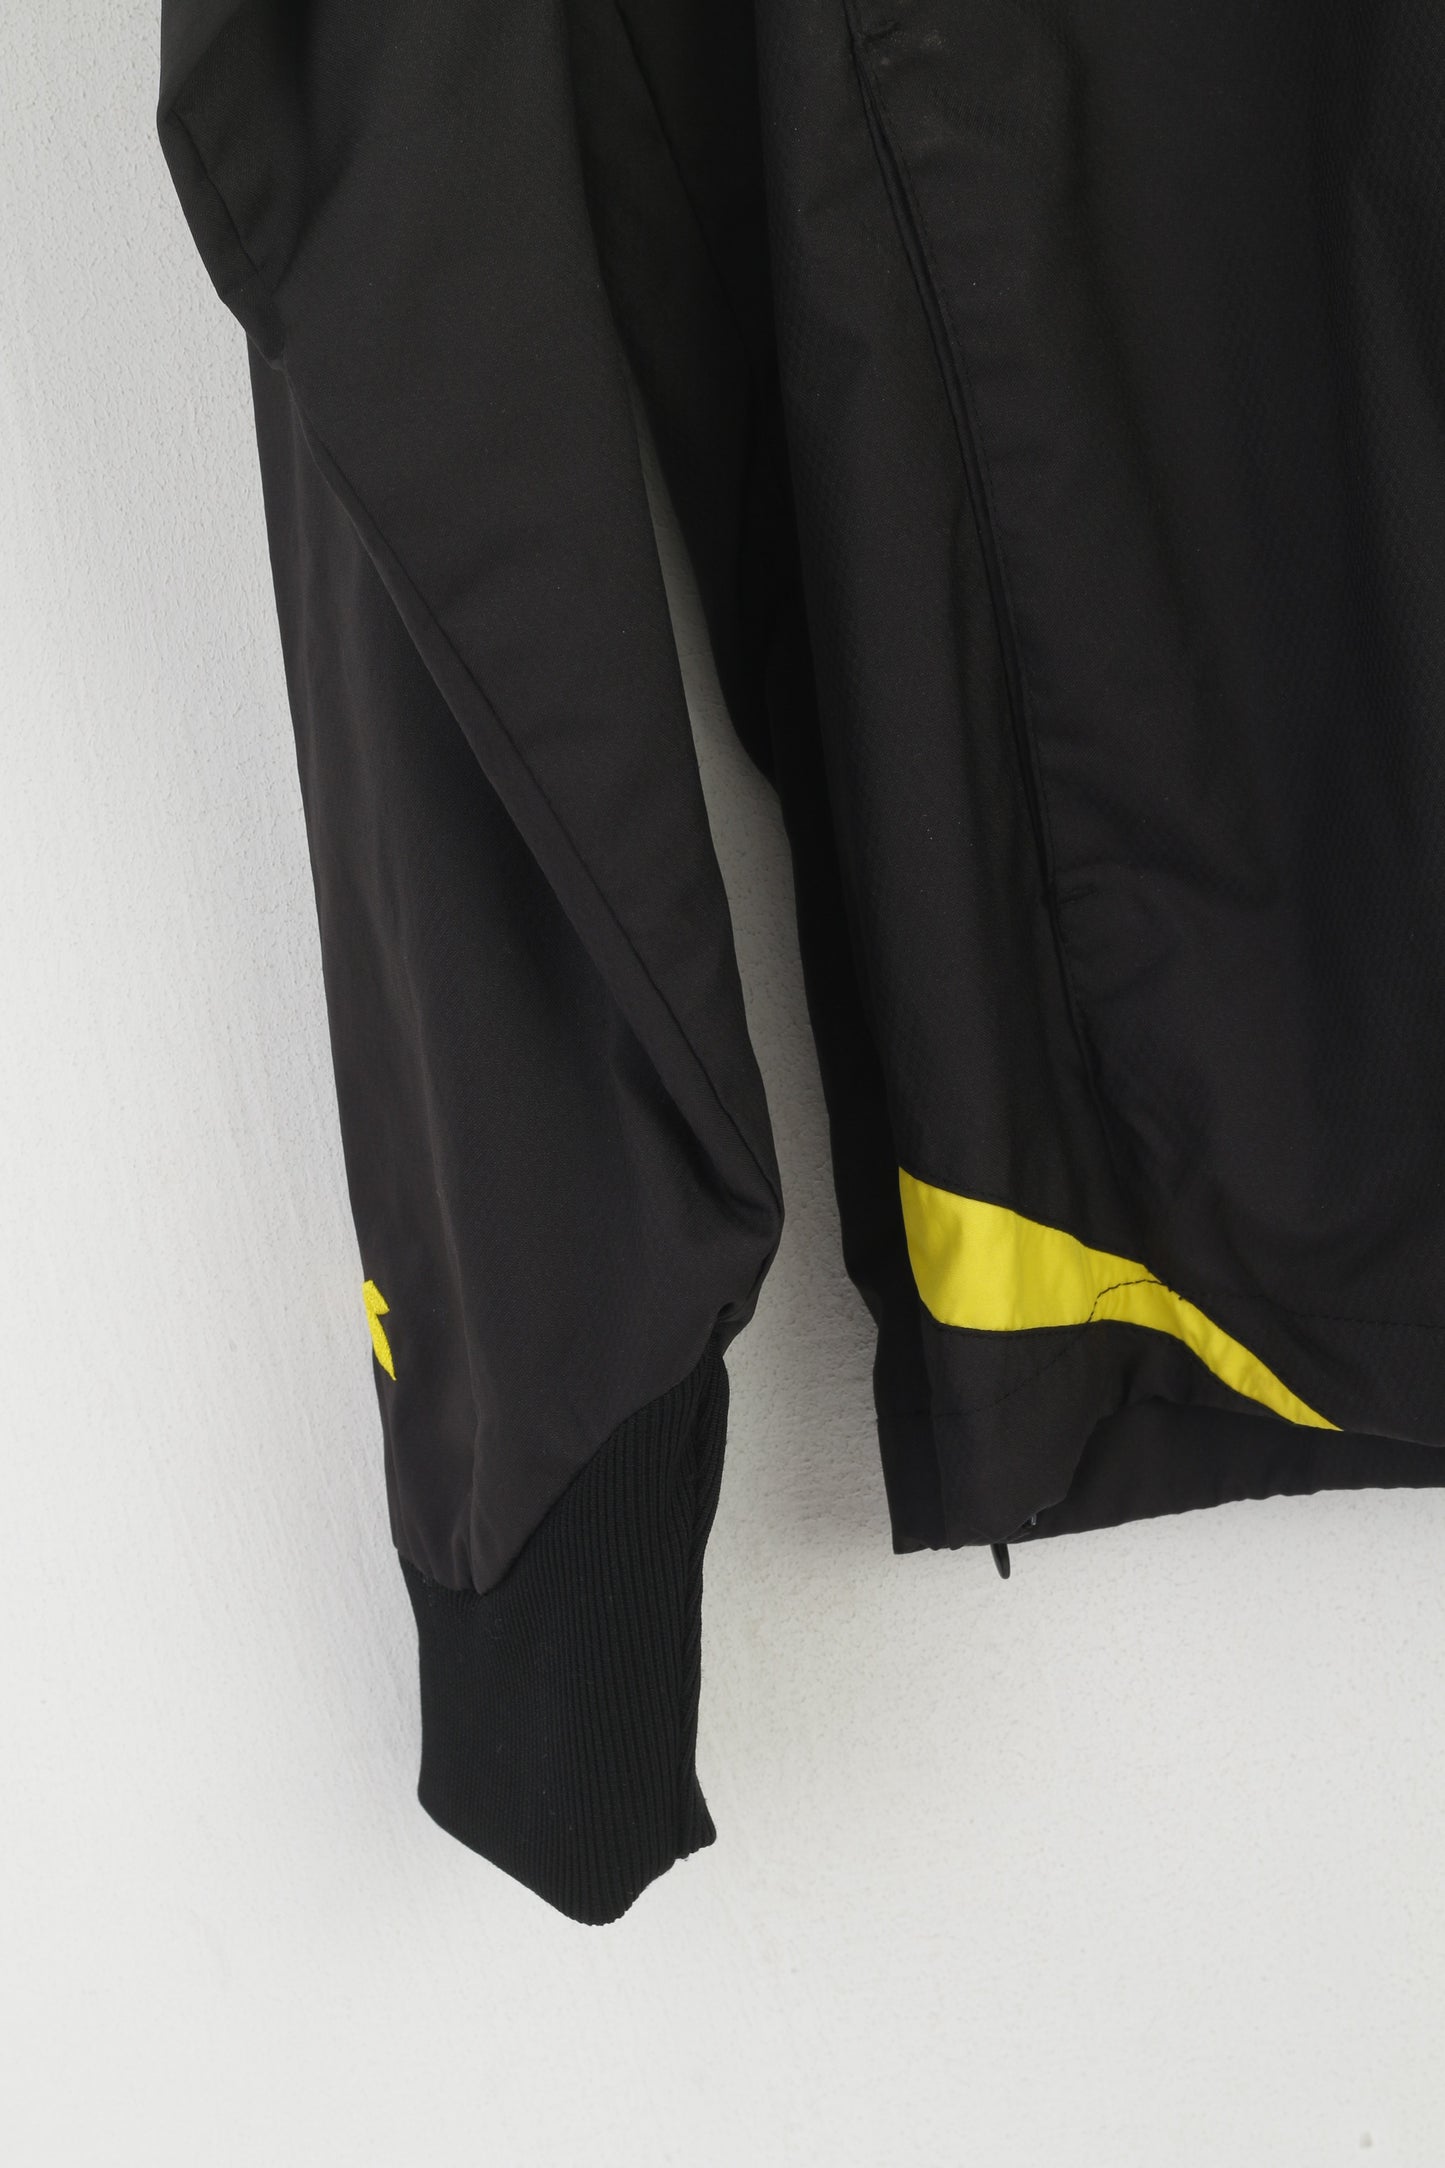 Diadora Stal Kameratene Boys 150 Jacket Black  Zip Neck Sportswear Norway Top